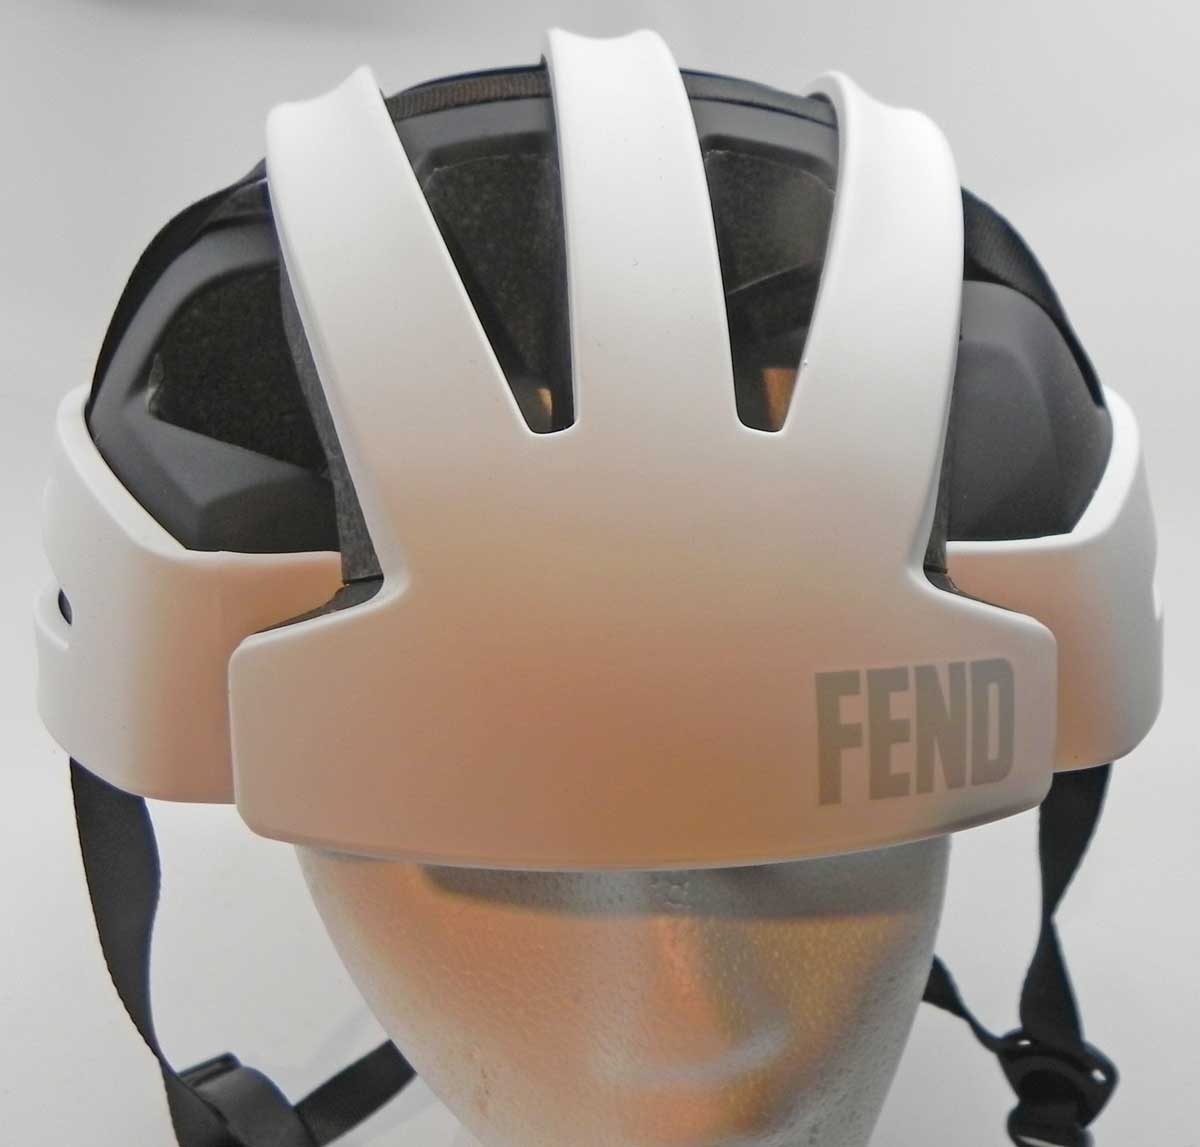 Fend helmet image